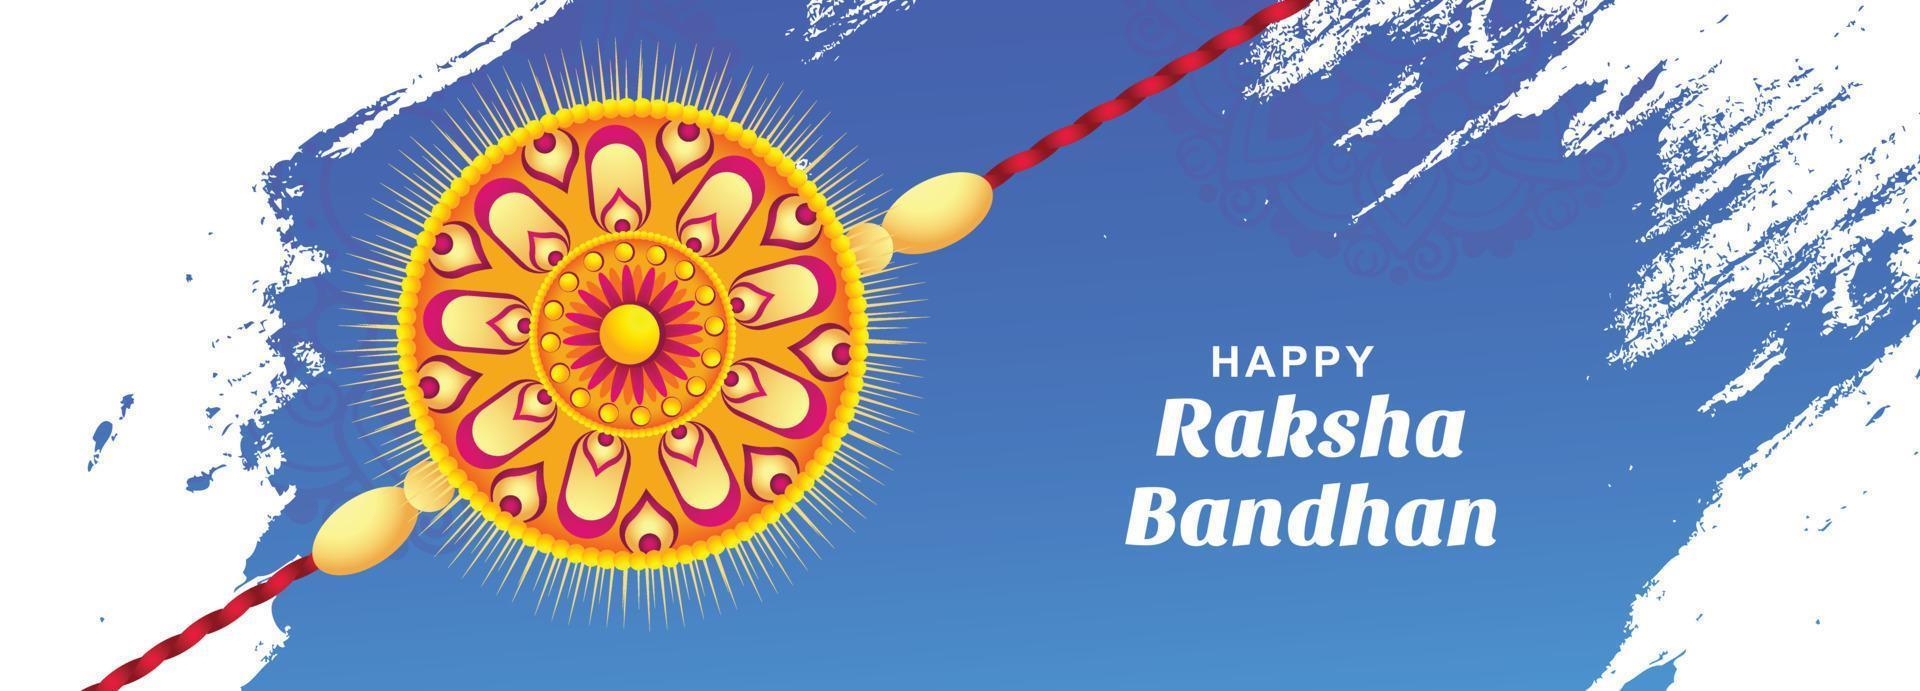 feliz design de banner de cartão festival raksha bandhan vetor